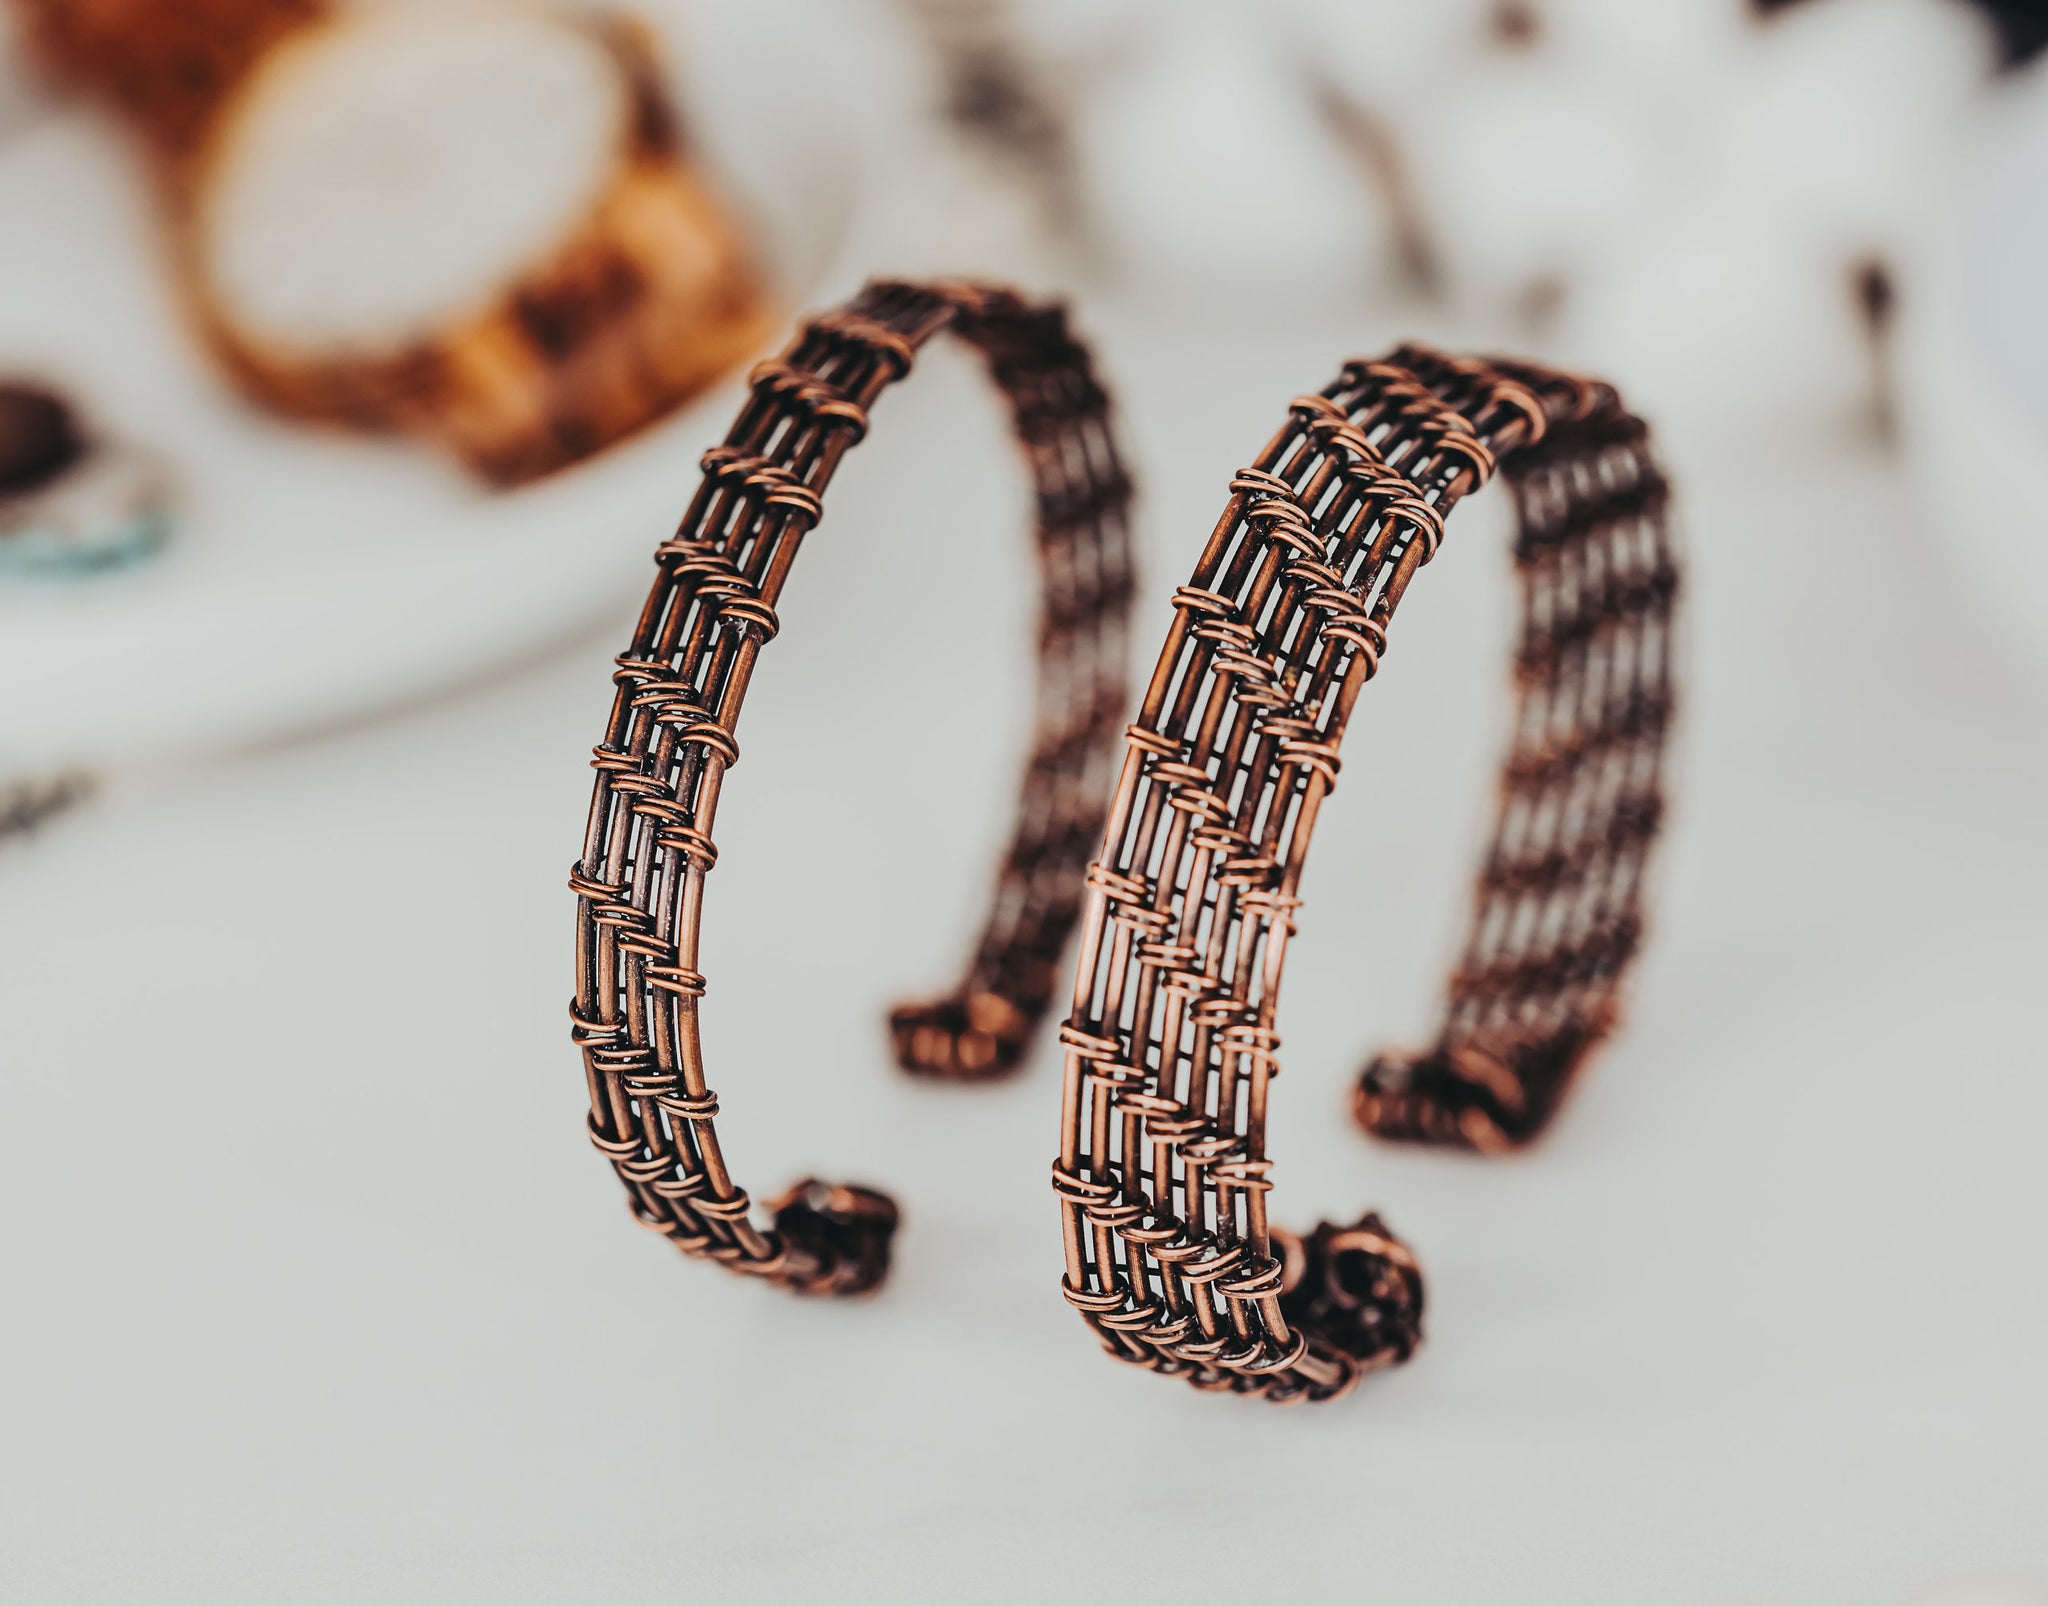 Unisex silver weave braided bracelet - Hand Stamped Trinkets